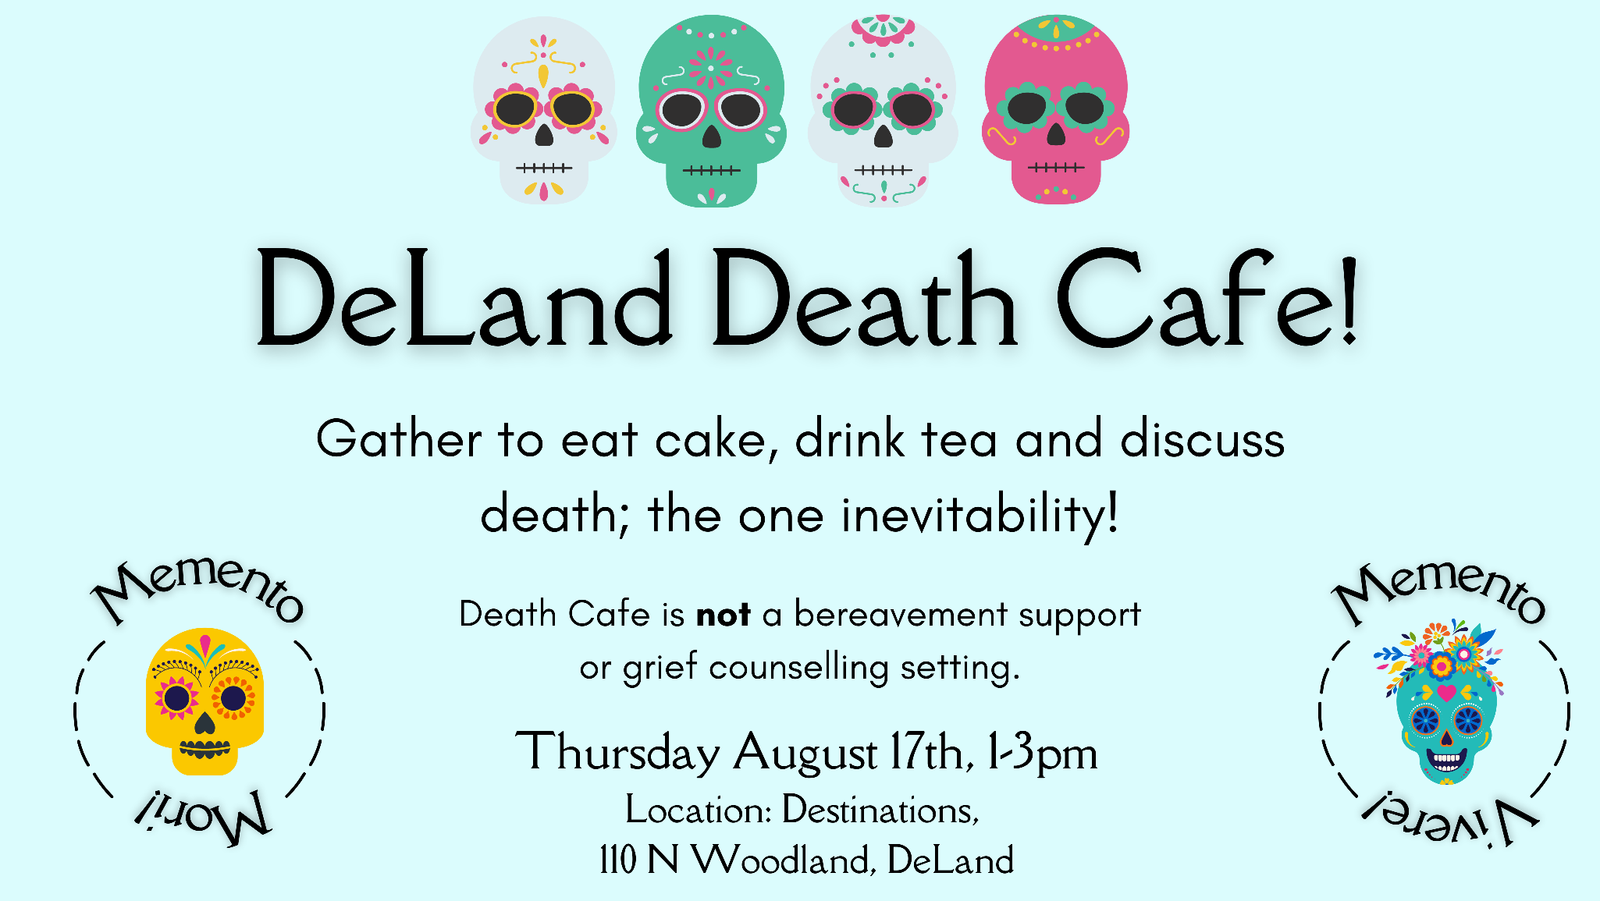 DeLand Death Cafe